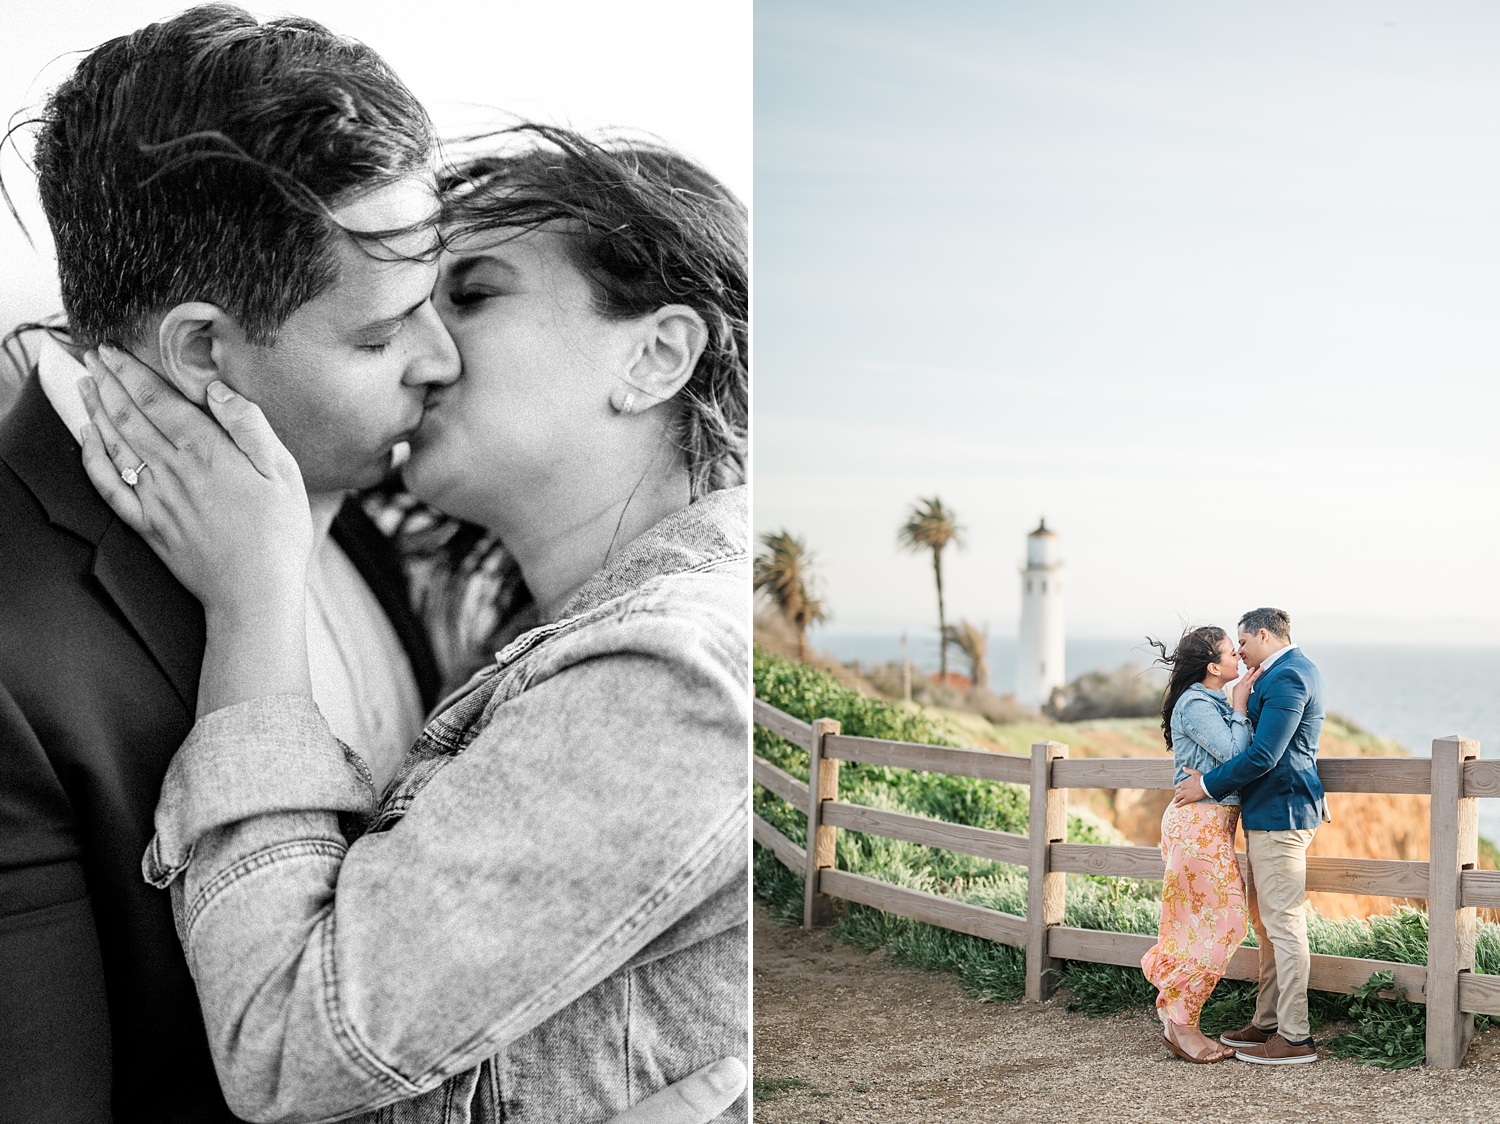 Palos Verdes Lighthouse Engagement Photos at Sunset | Wedding Photographer -180.jpg